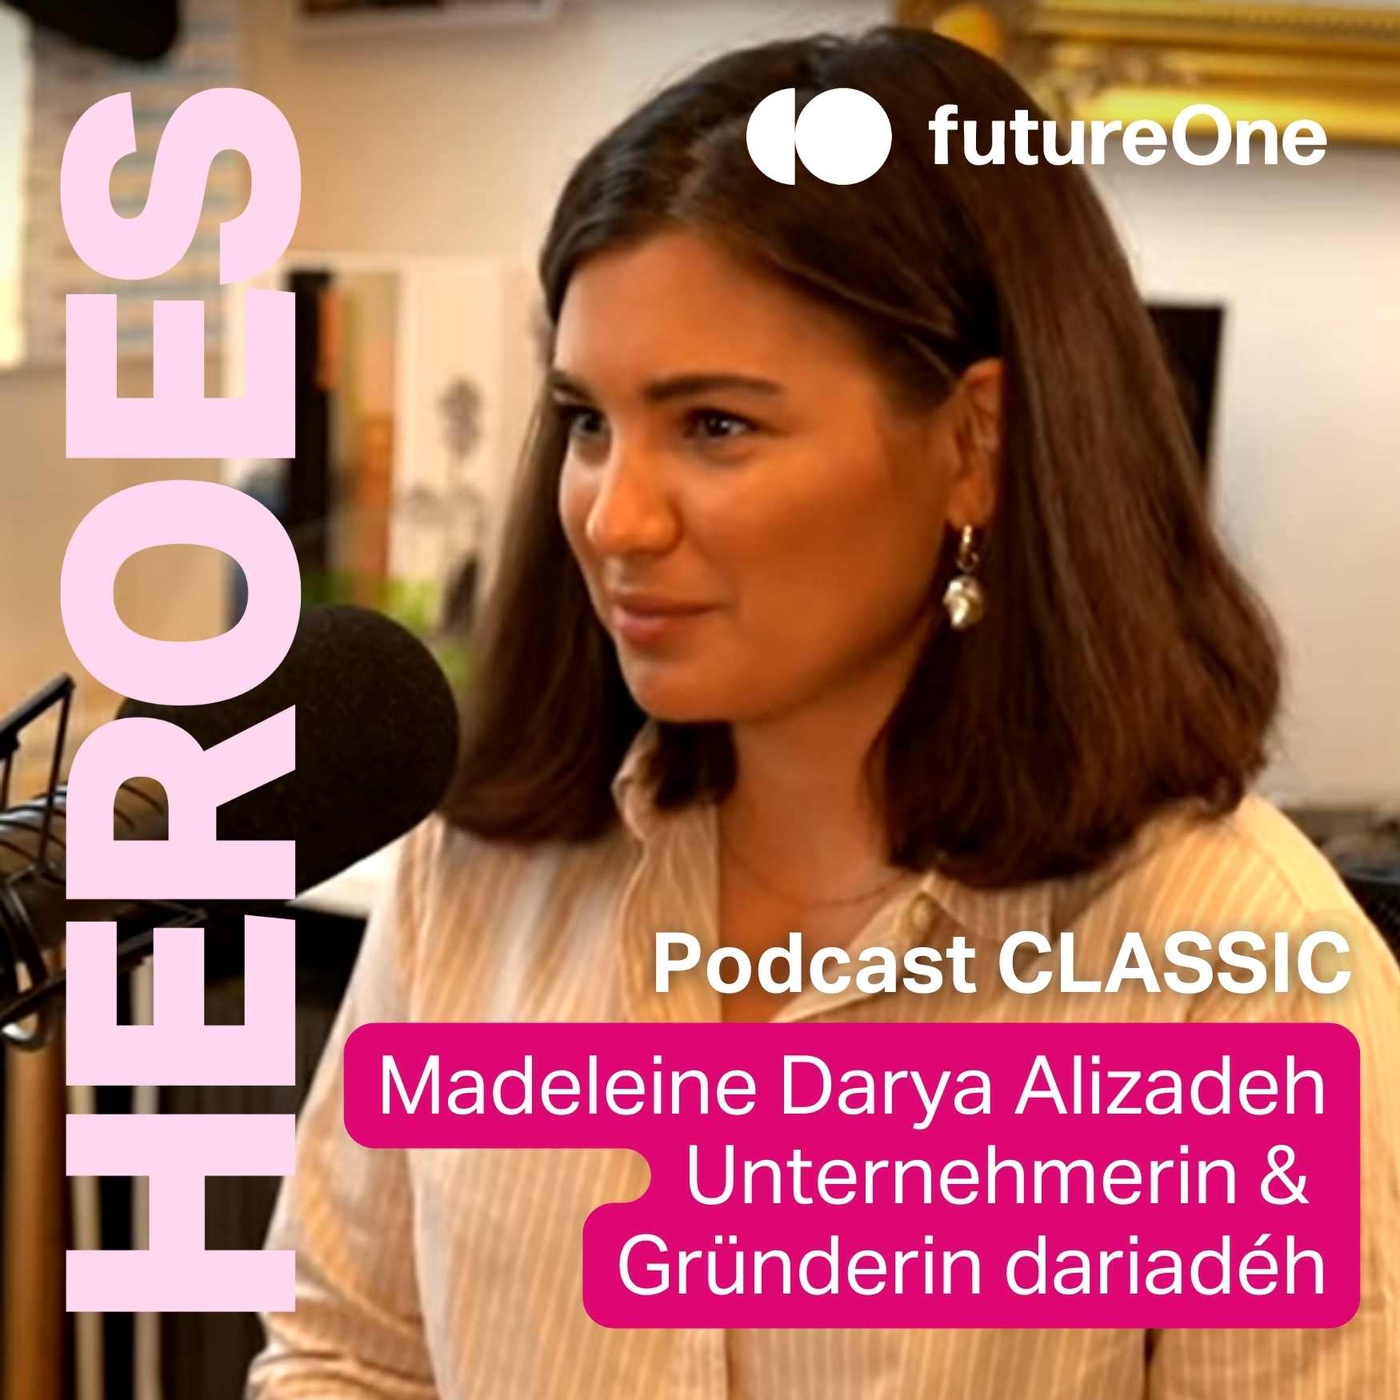 #95 CLASSICS: Madeleine Darya Alizadeh - Unternehmerin & Gründerin dariadéh